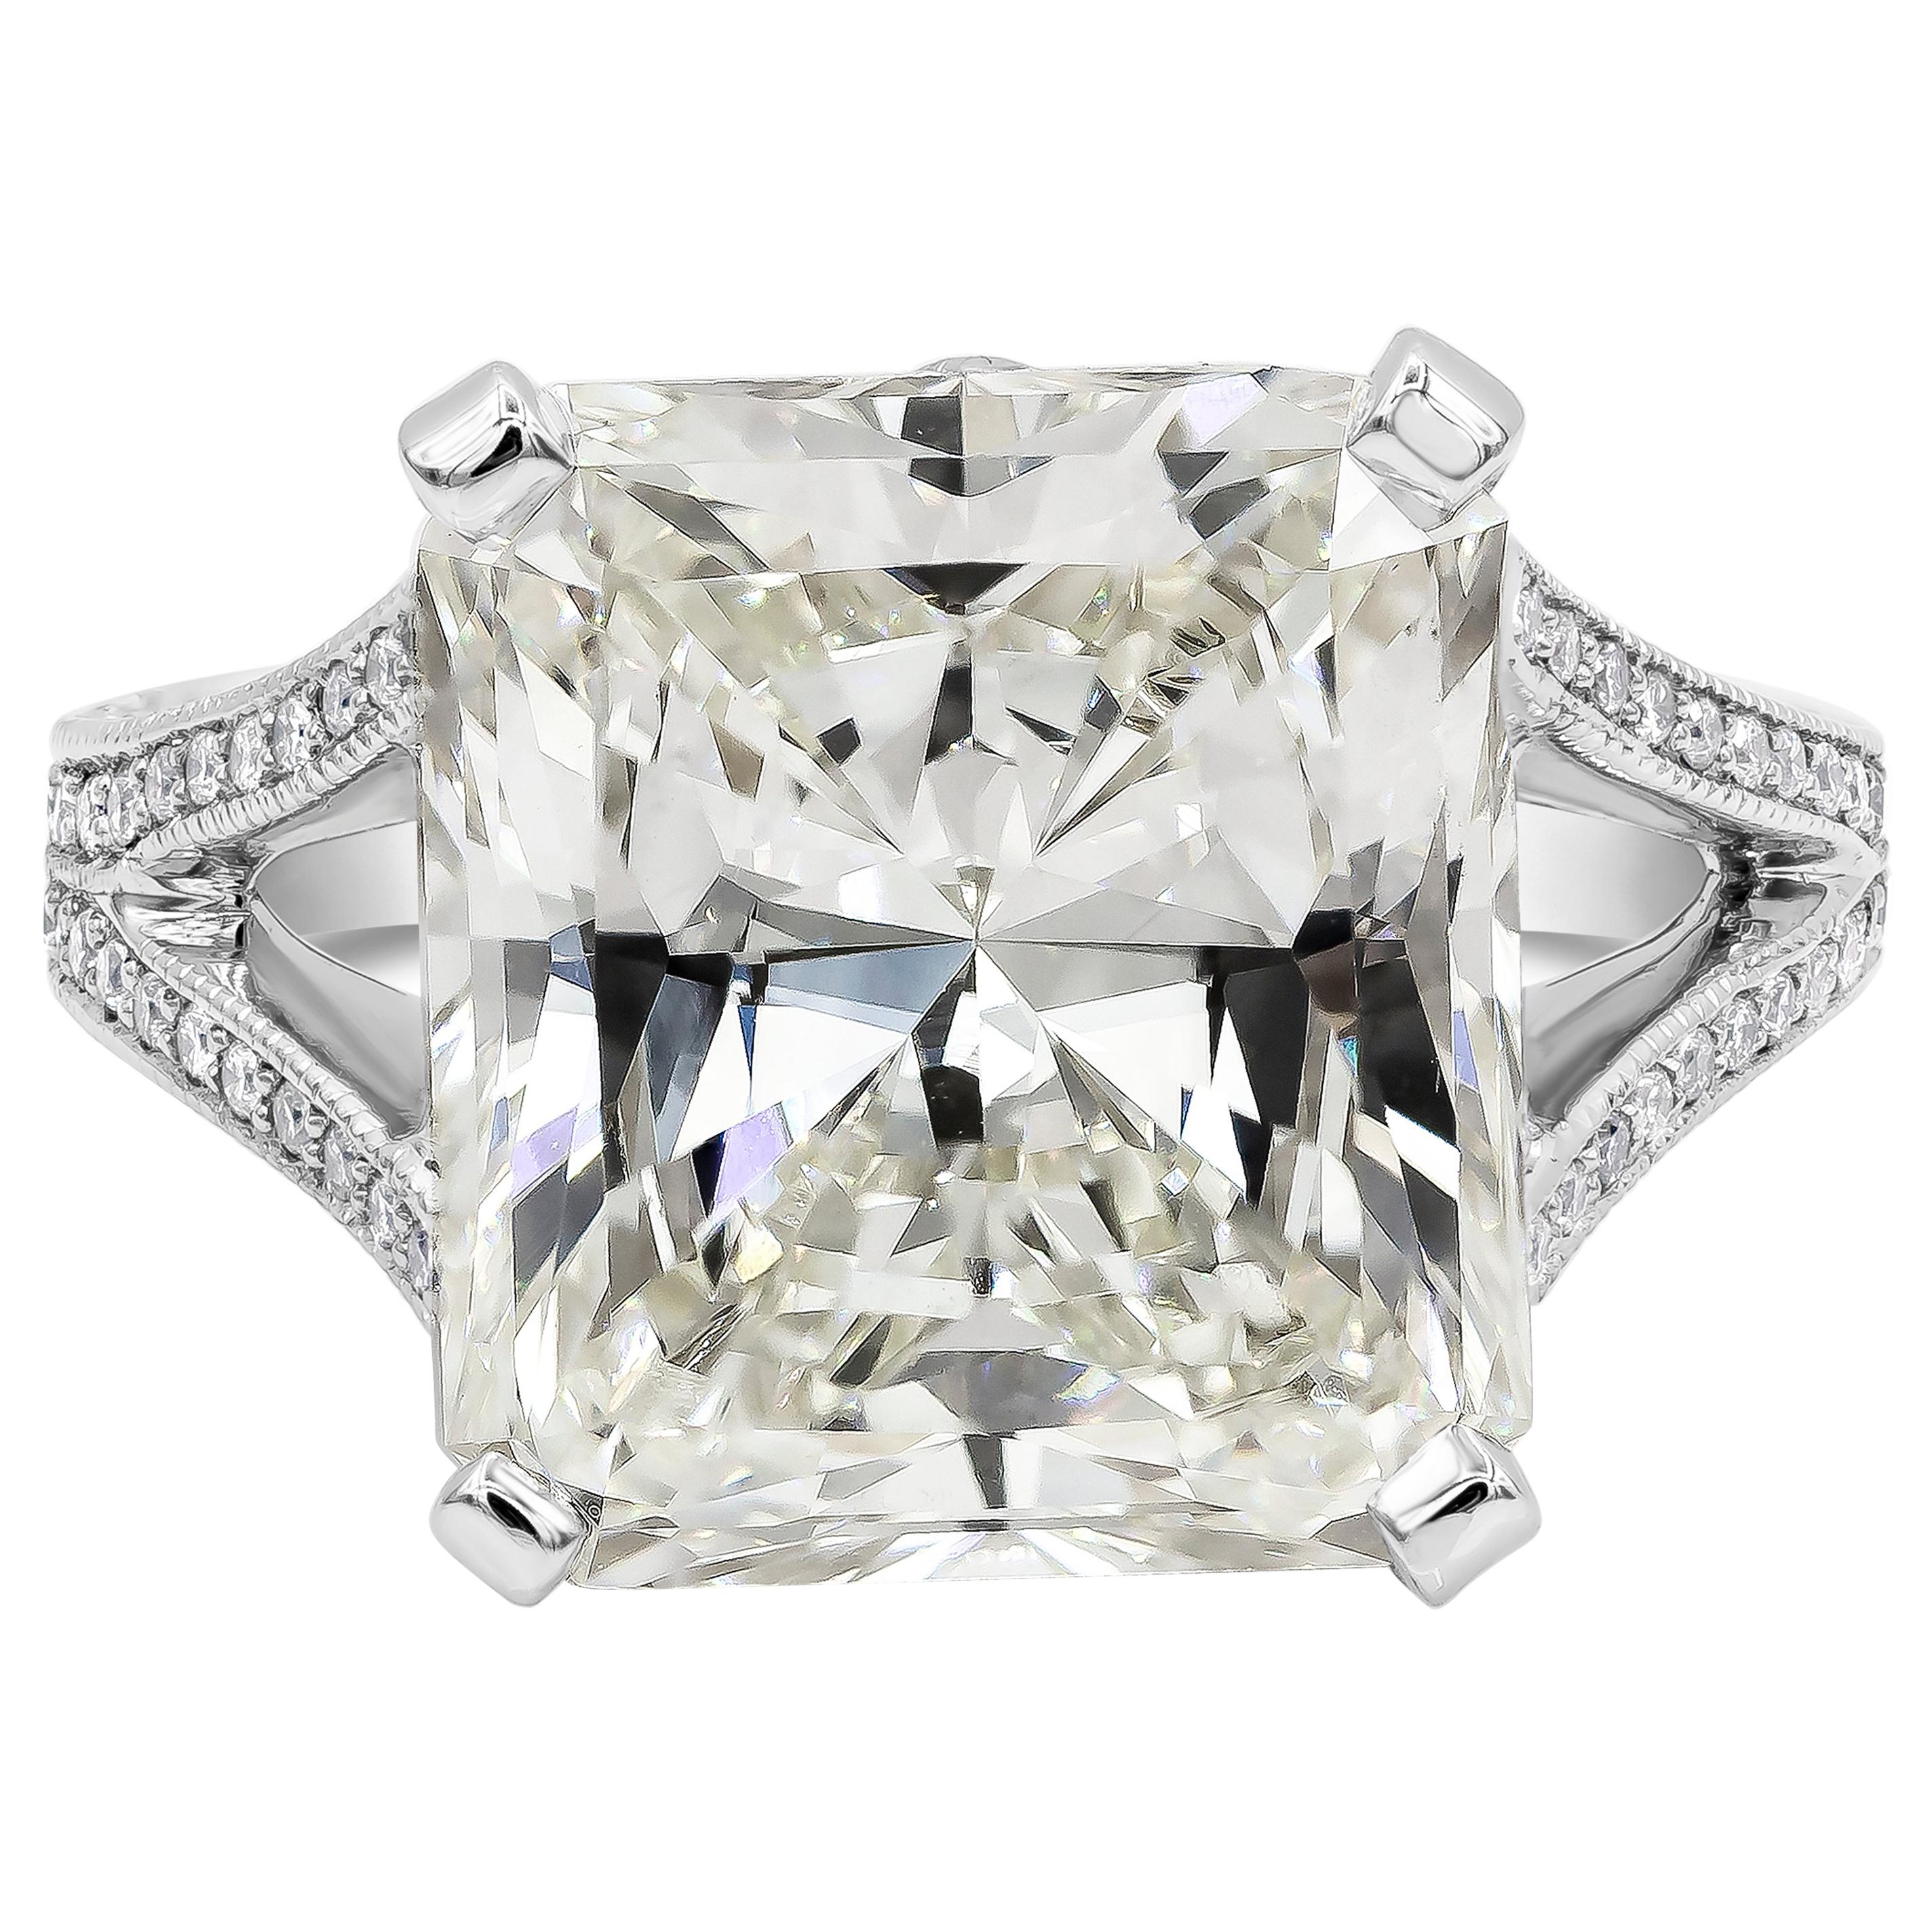 Roman Malakov GIA Certified 10.65 Carat Radiant Cut Diamond Engagement Ring